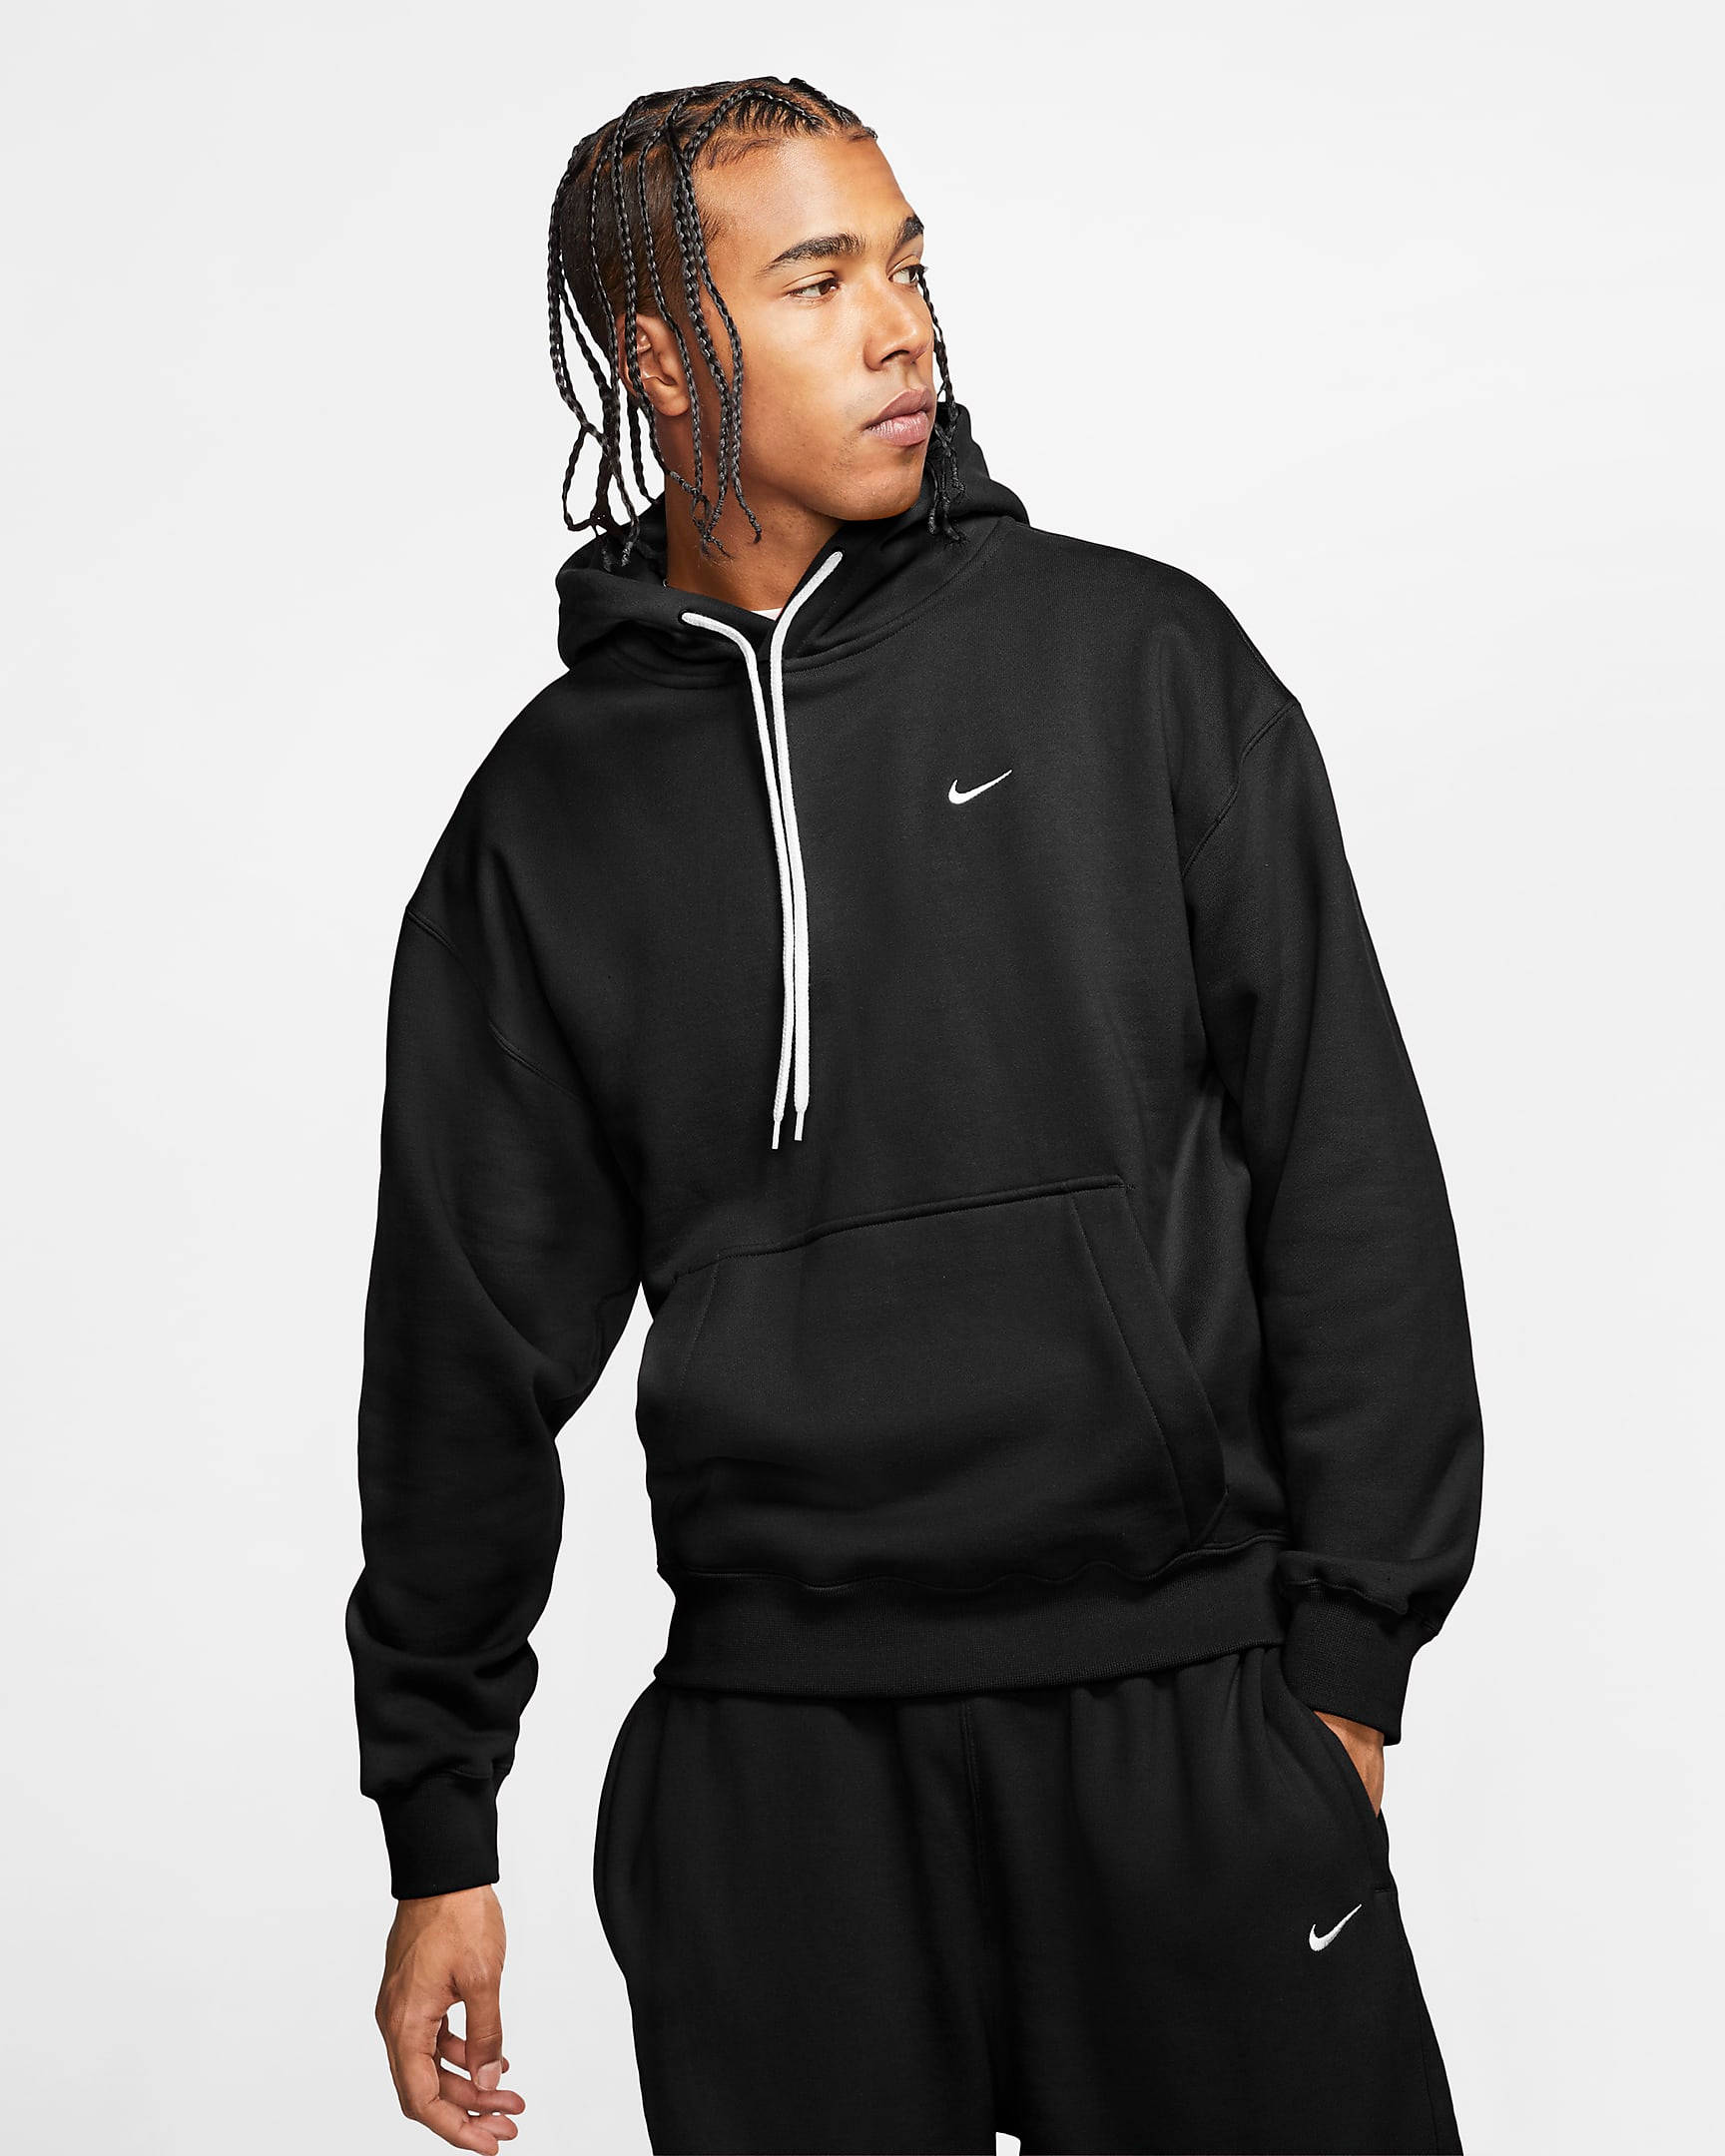 NikeLab Fleece Hoodie - Black | The Sole Supplier